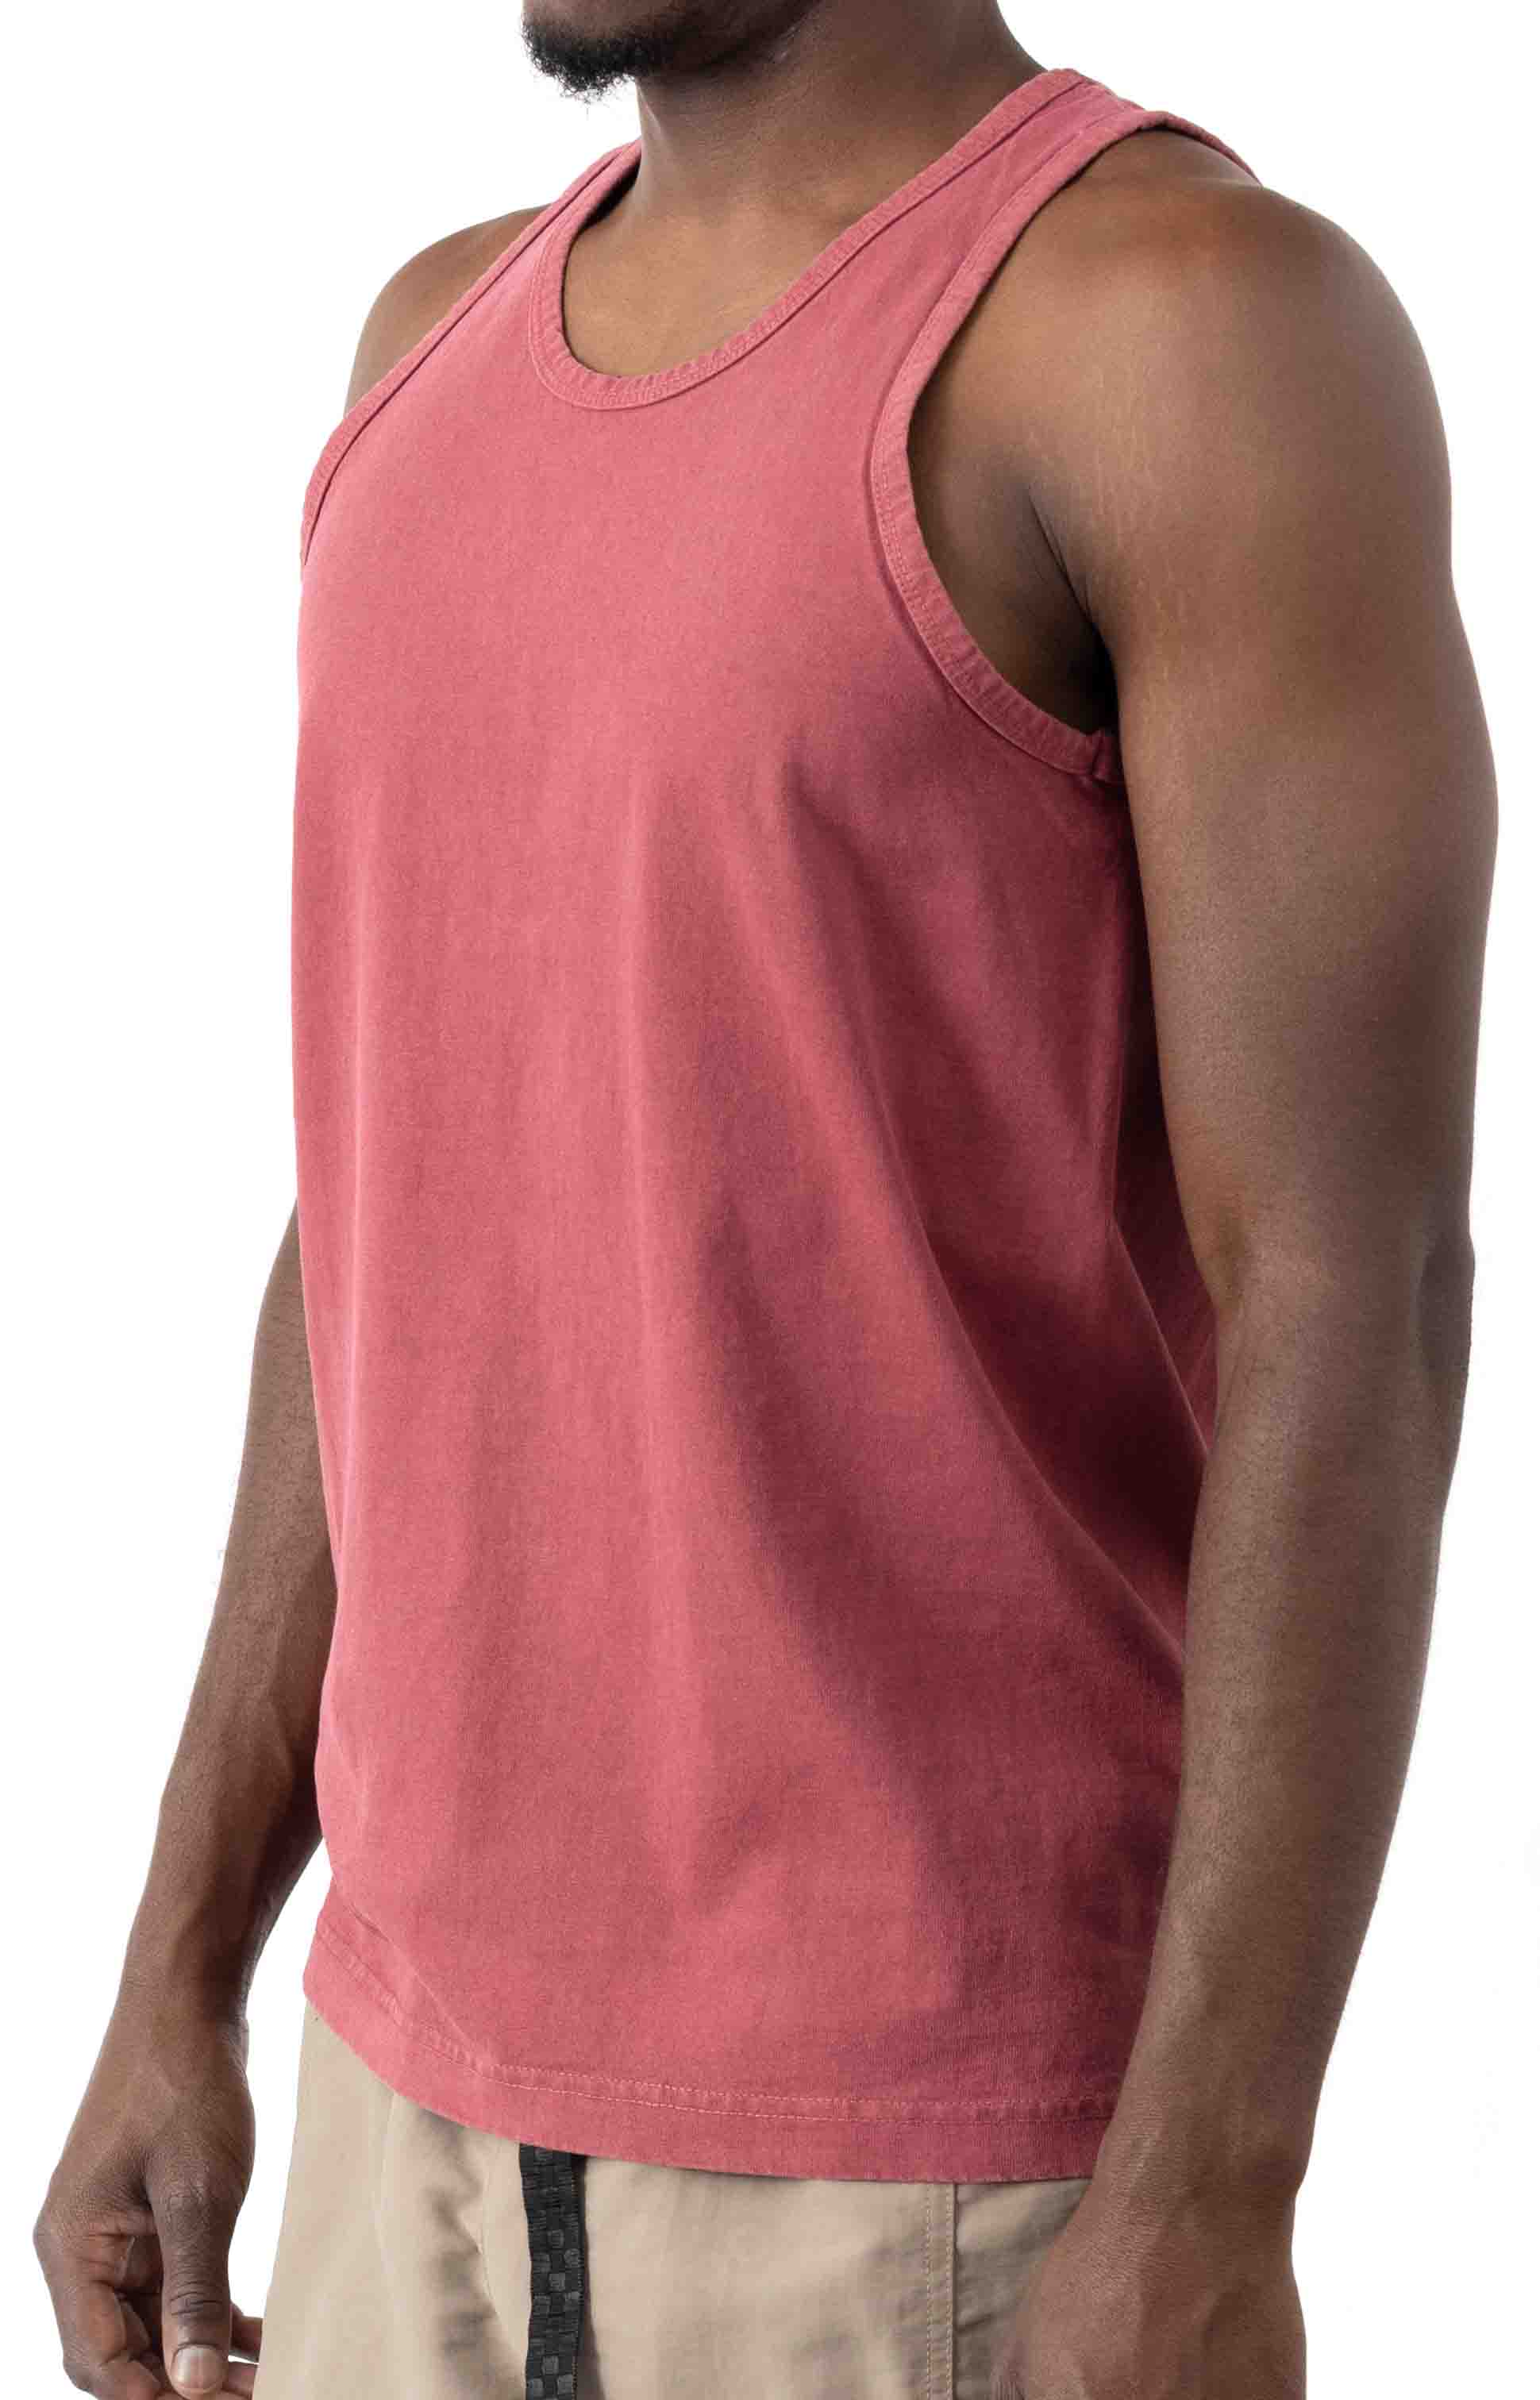 Garment Dye Tank Top - Clay Red